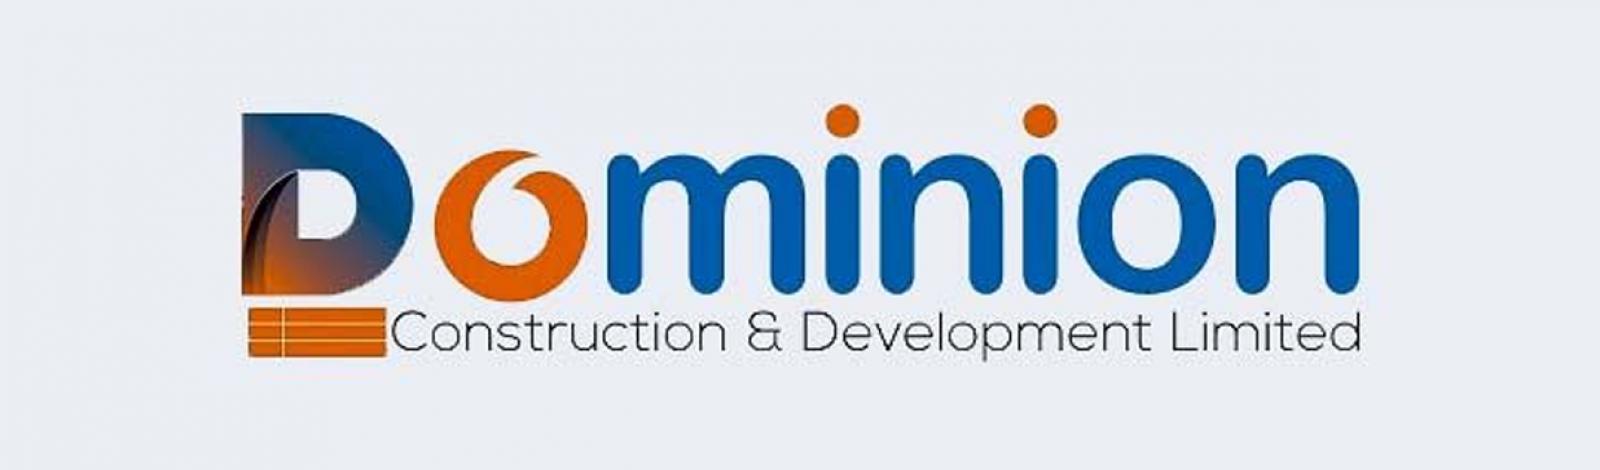 Dominion Construction & Development Ltd banner